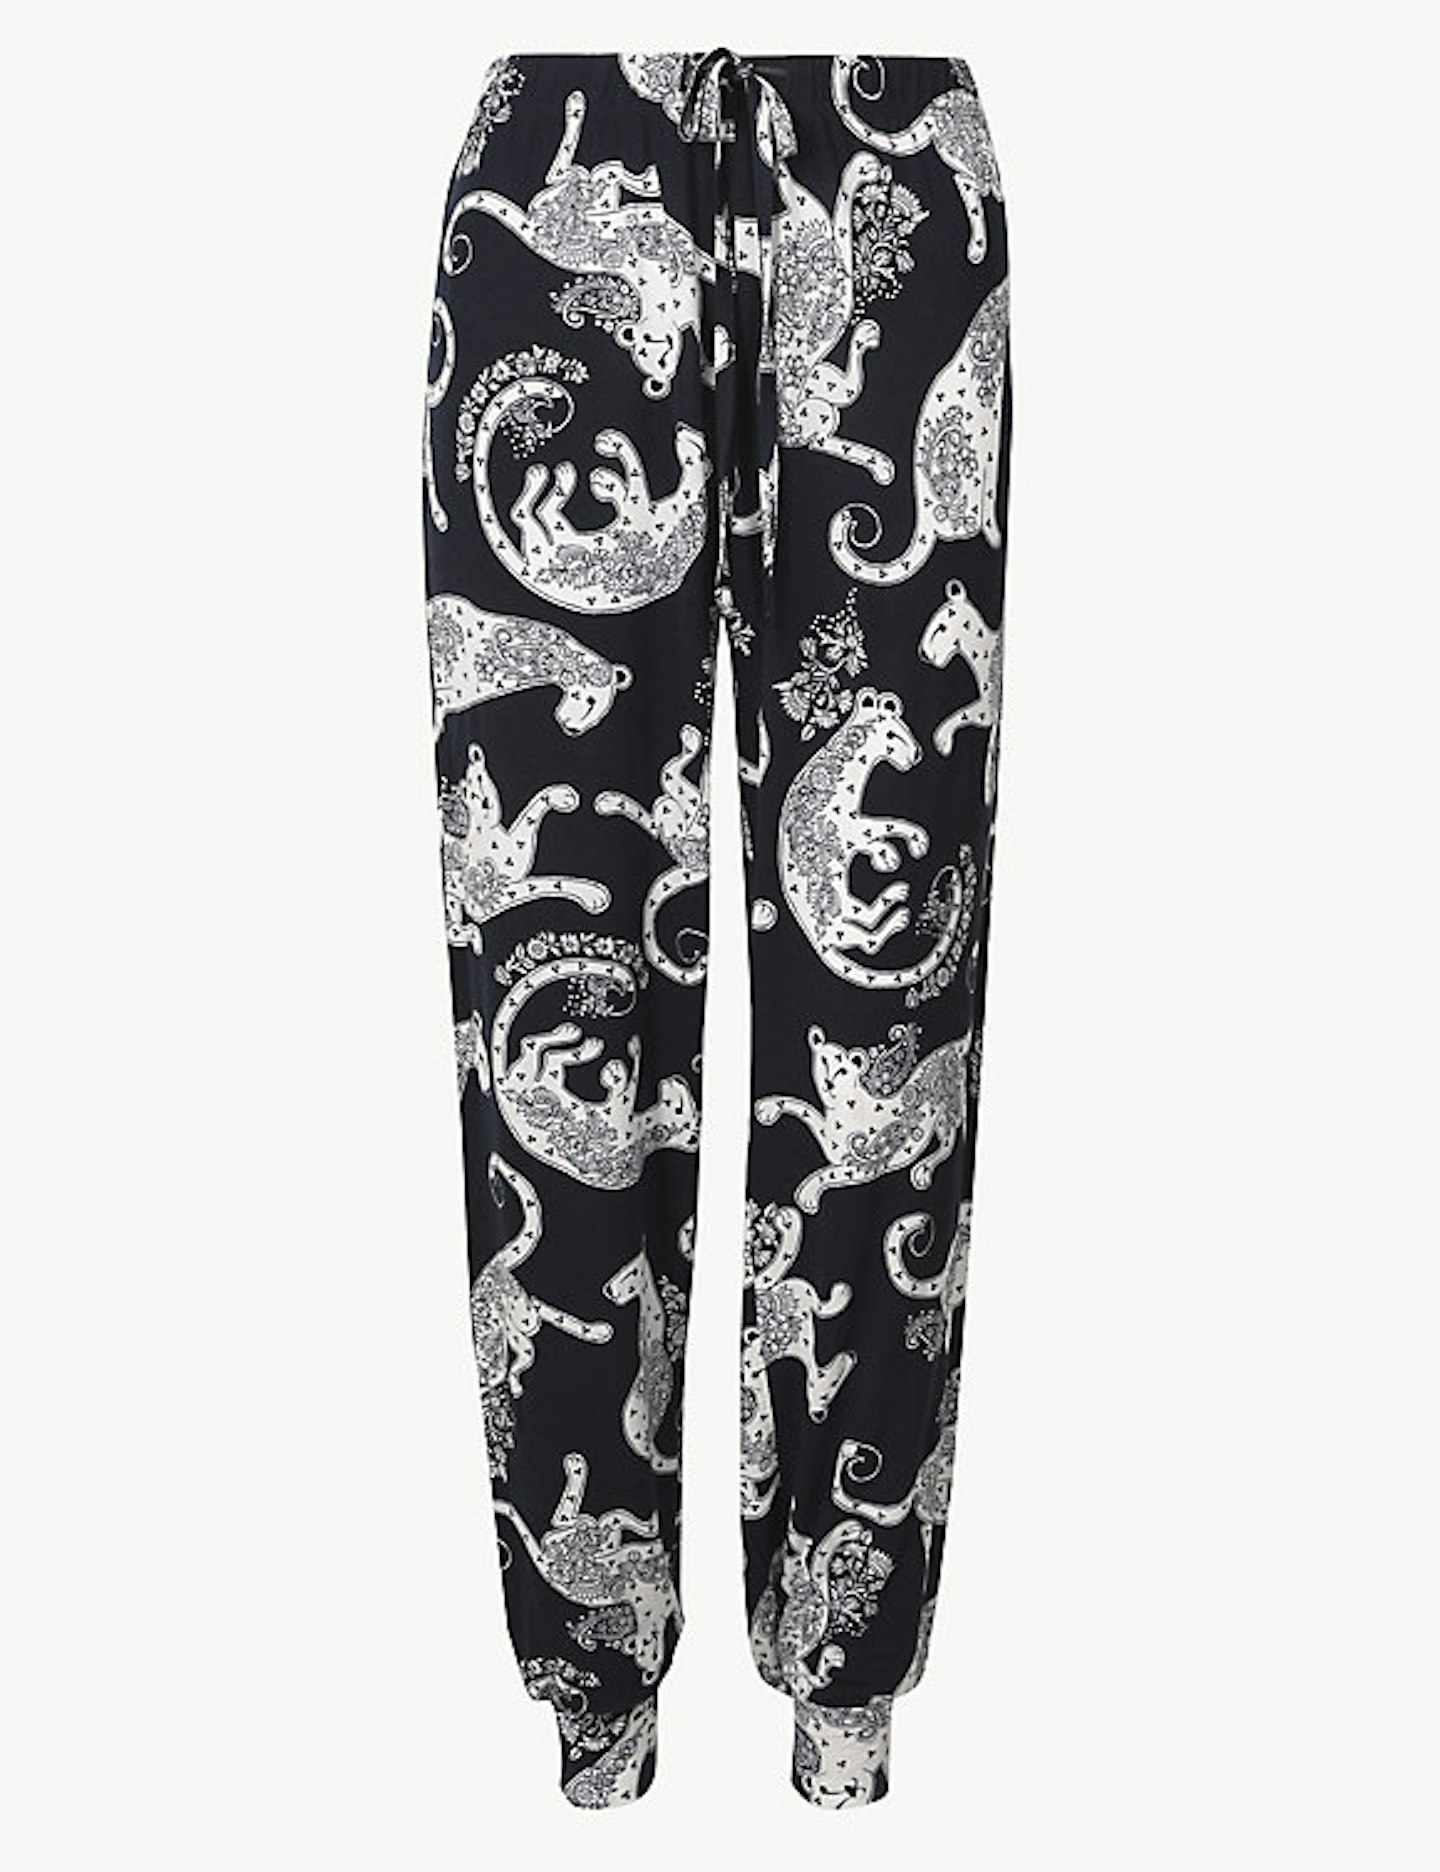 Marks & Spencer, Leopard Cuffed Hem Pyjama Bottoms, £10